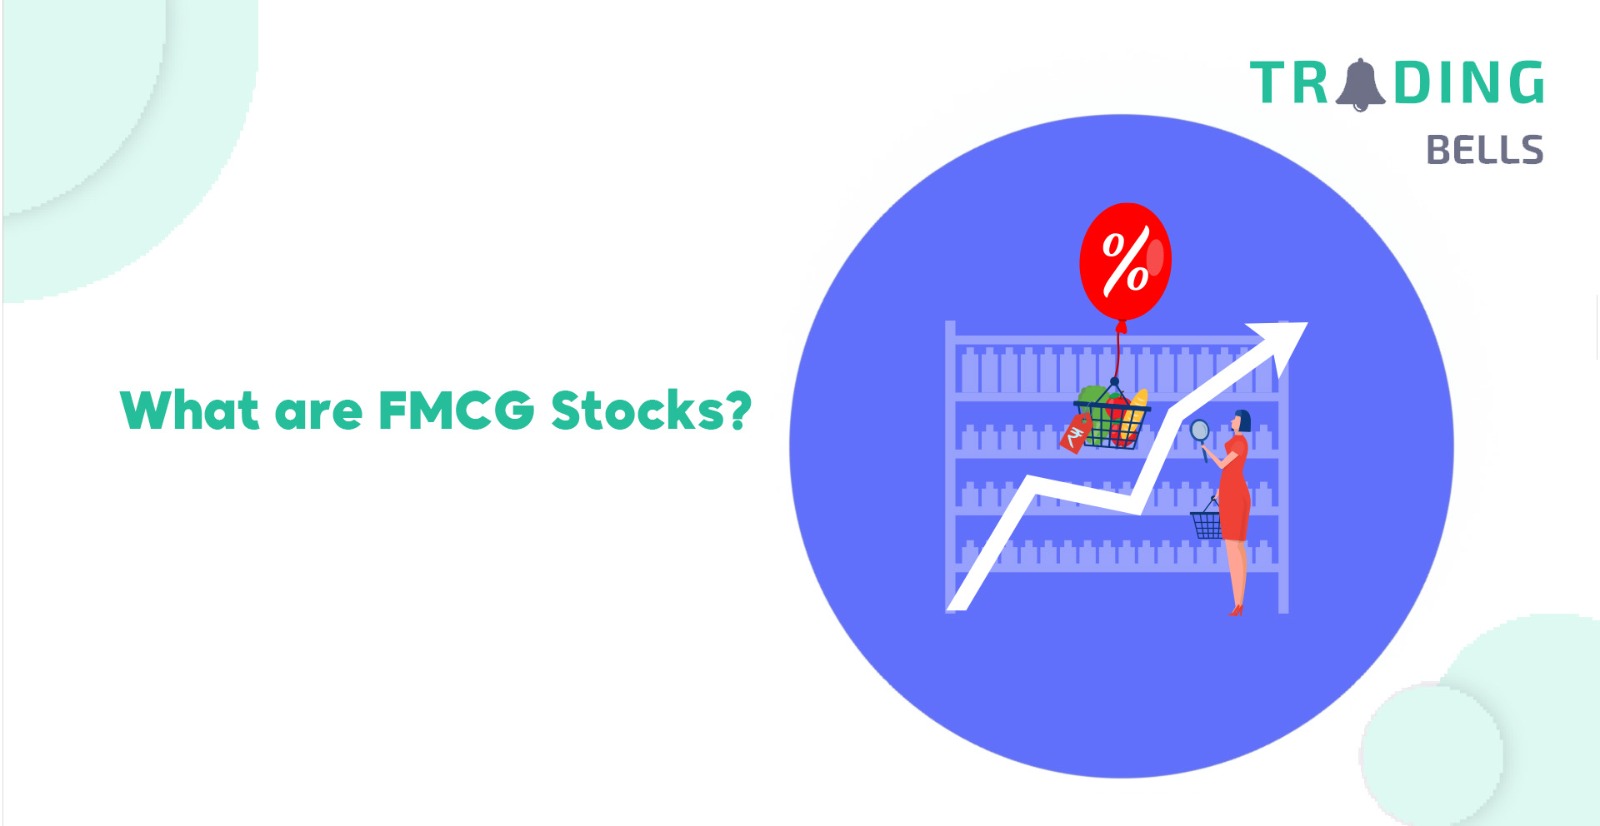 FMCG Stocks